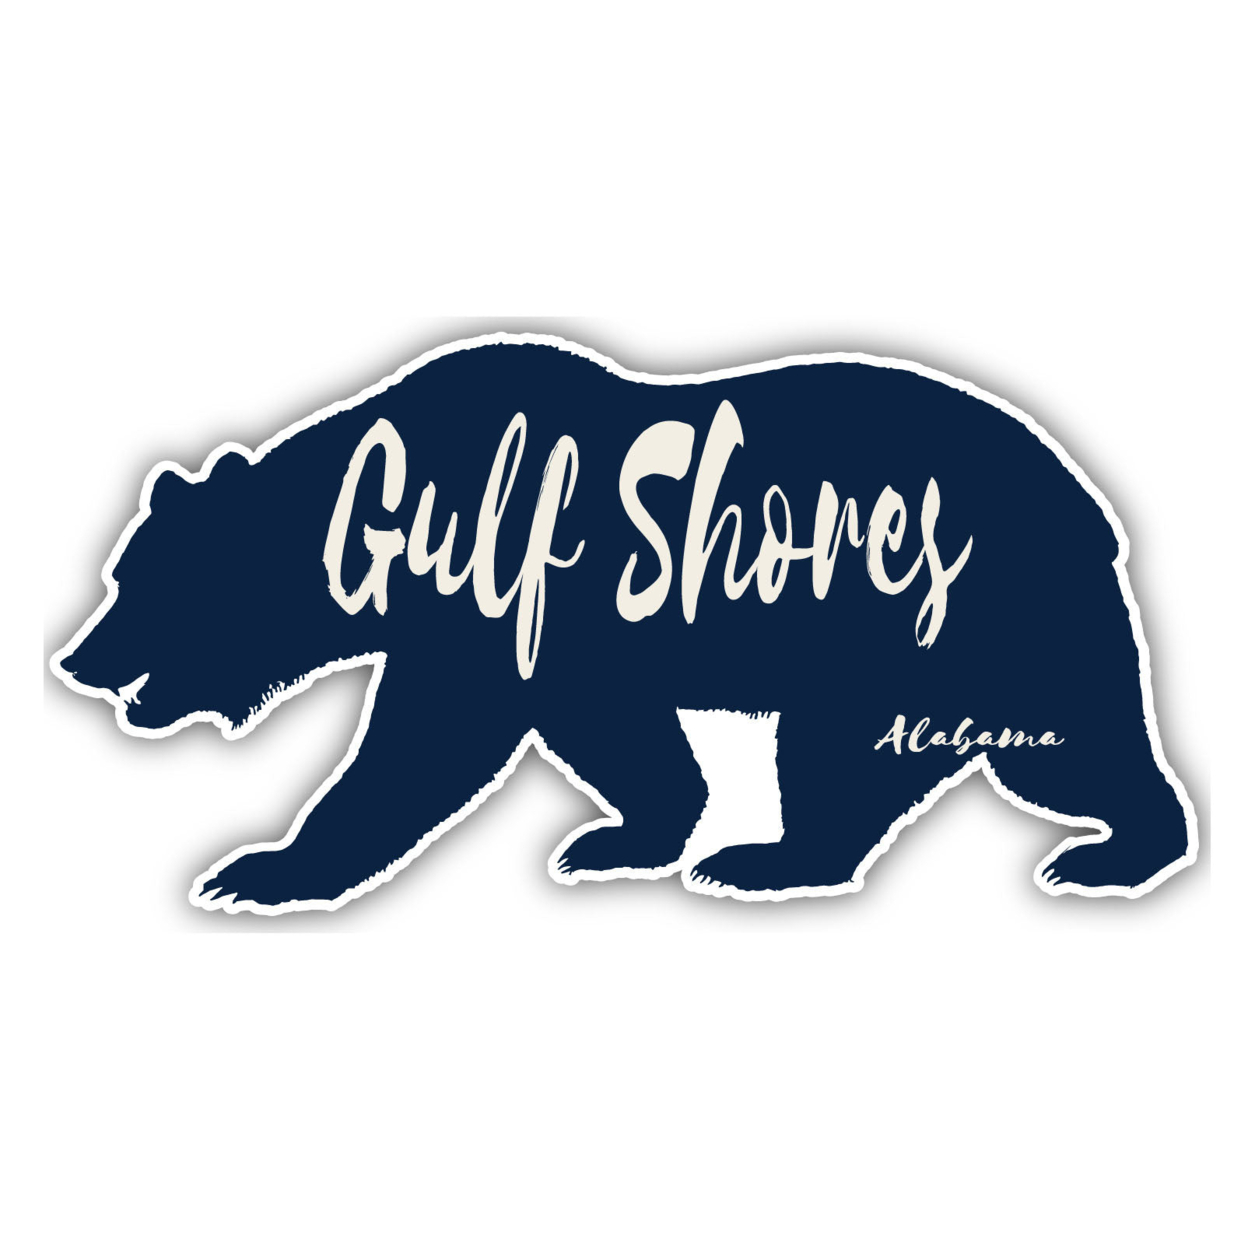 Gulf Shores Alabama Souvenir Decorative Stickers (Choose Theme And Size) - Single Unit, 4-Inch, Tent